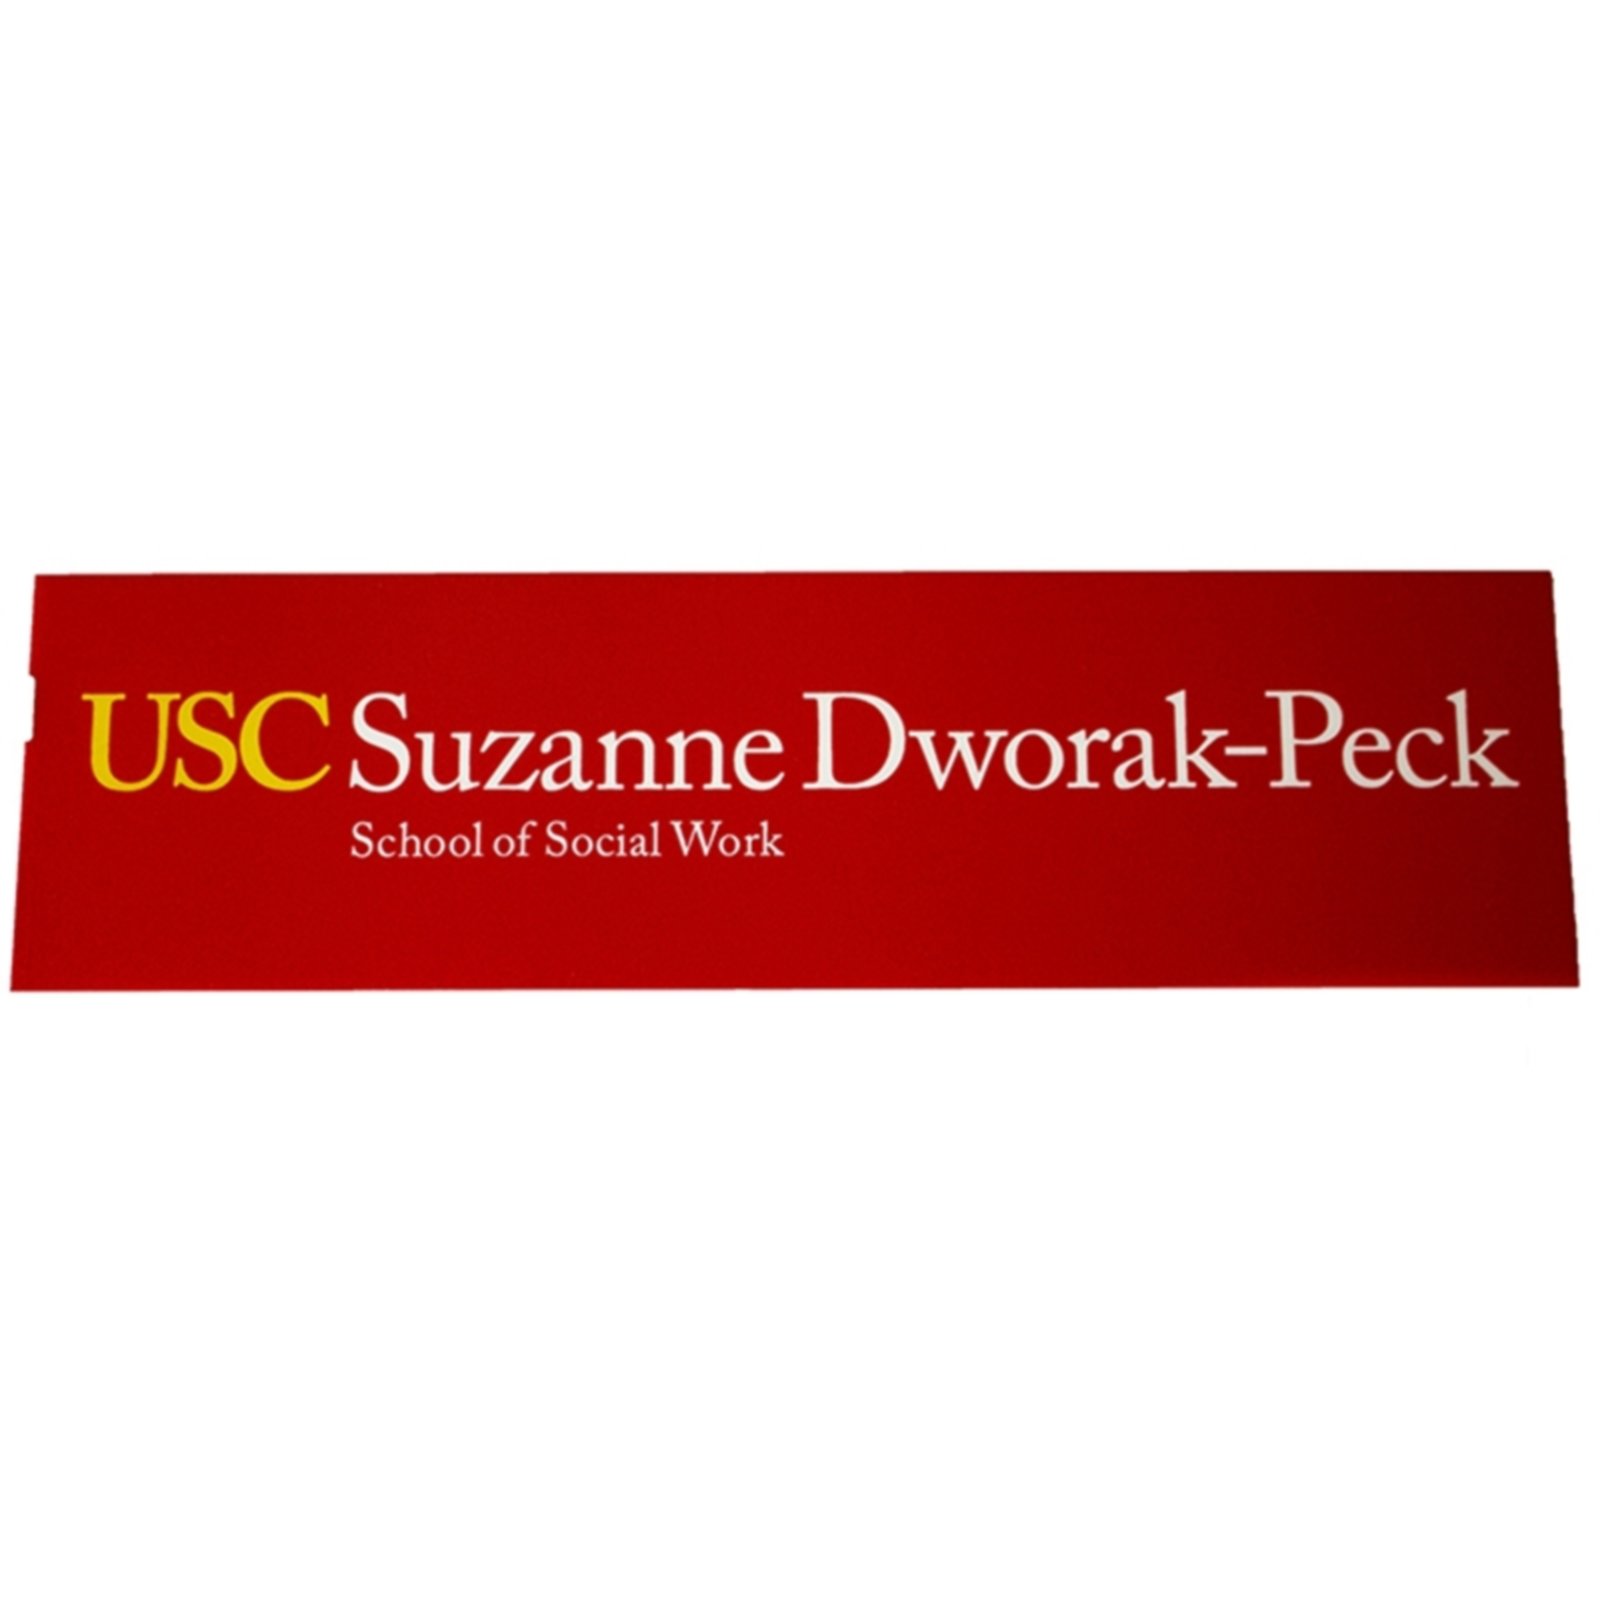 USC Suzanne Dworak-Peck School of Social Work Decal image01